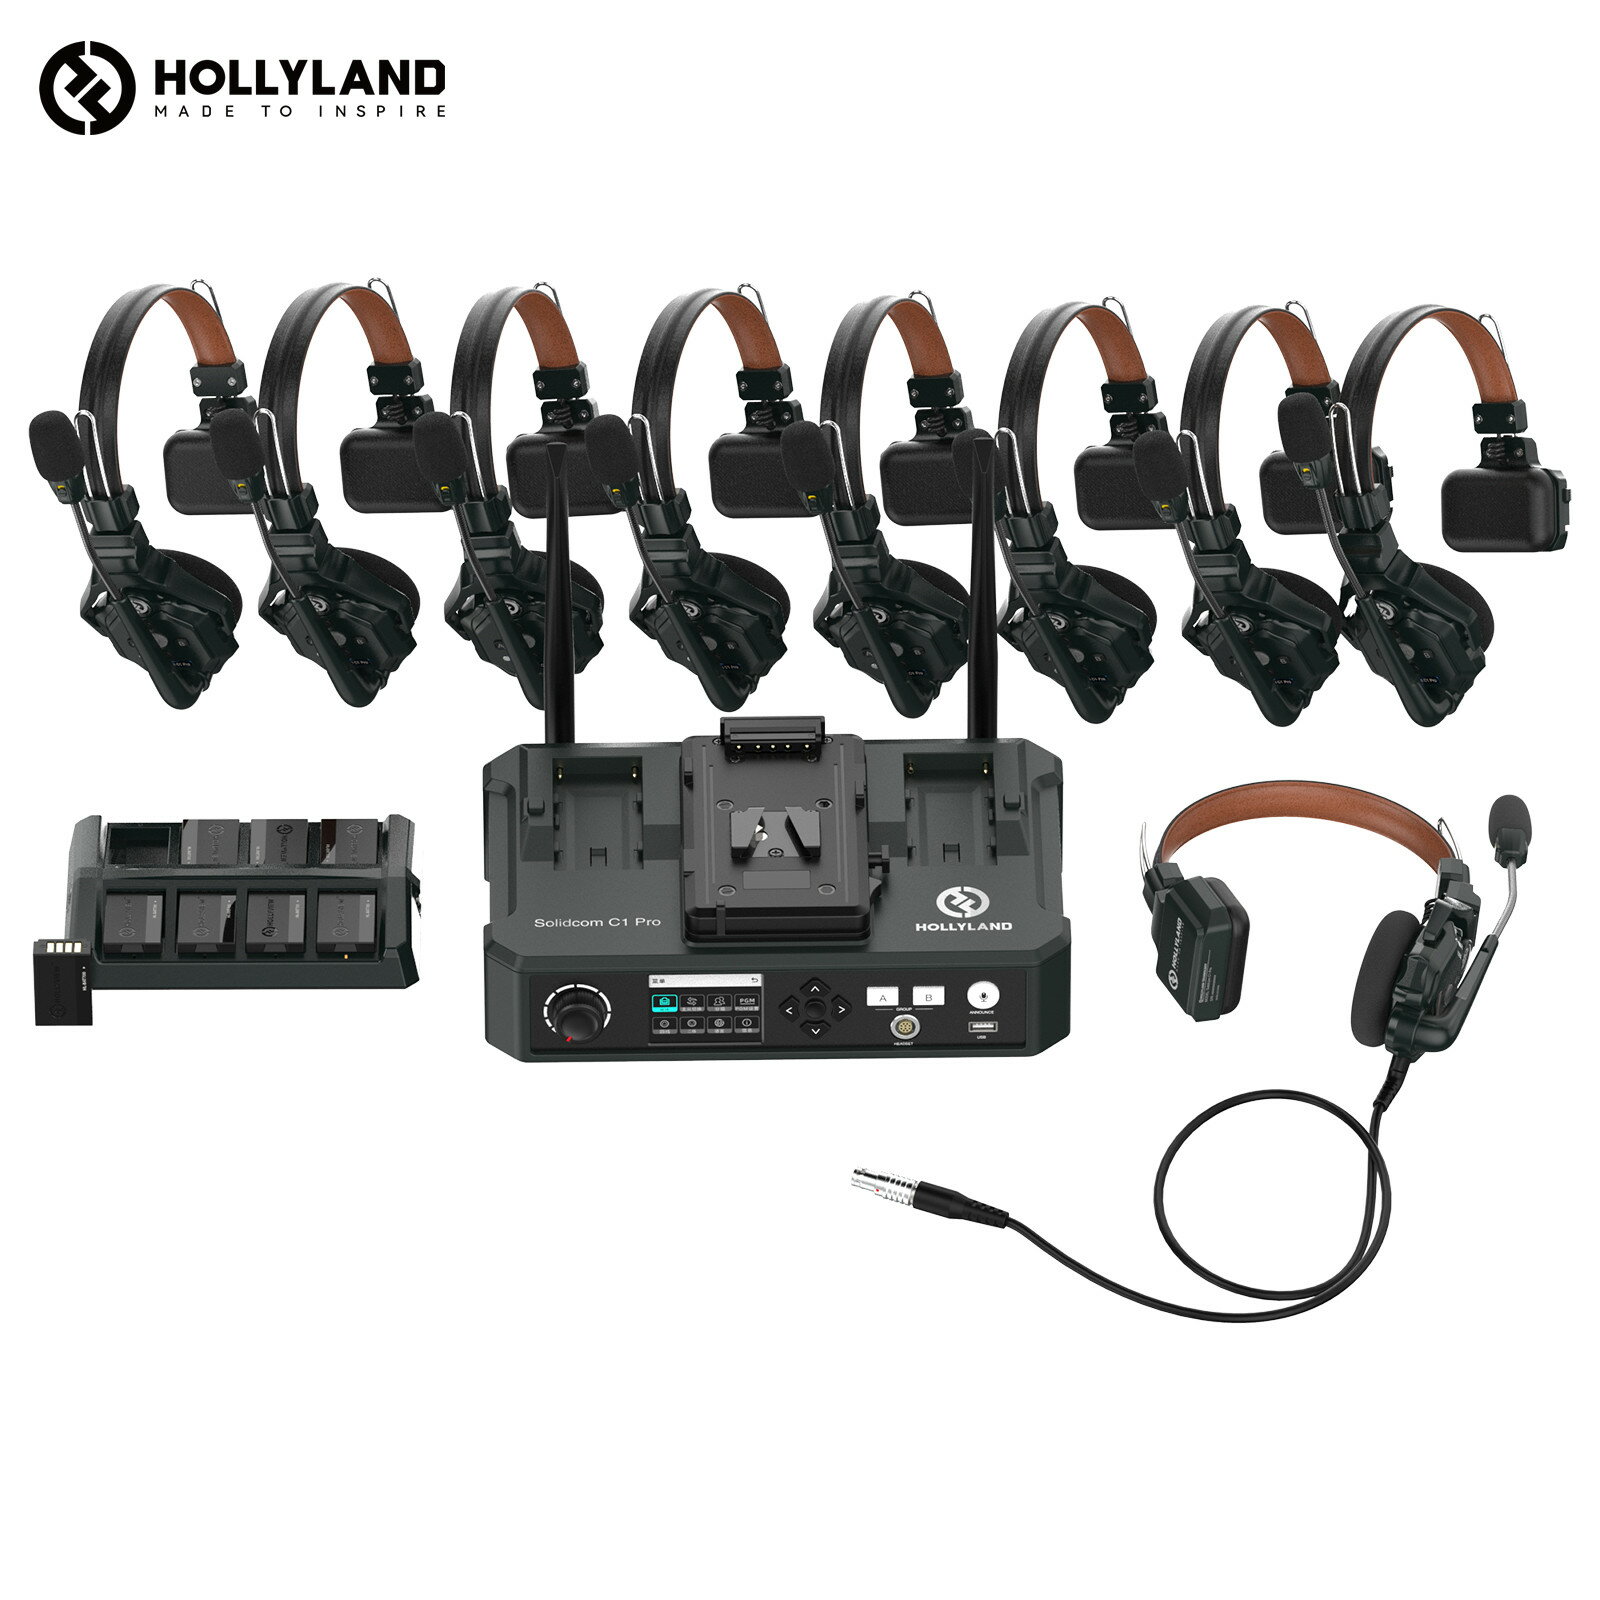 Hollyland Solidcom C1 Pro-HUB8S ワイヤレスインカム 9台セット ノイズキャンセリング・PTT・ミュート機能付き 全二重 通話範囲350m 親機x1子機x8 子機増設可能 小型軽量ヘッドセット 設定不要 箱から出してすぐに使える同時通話インカム